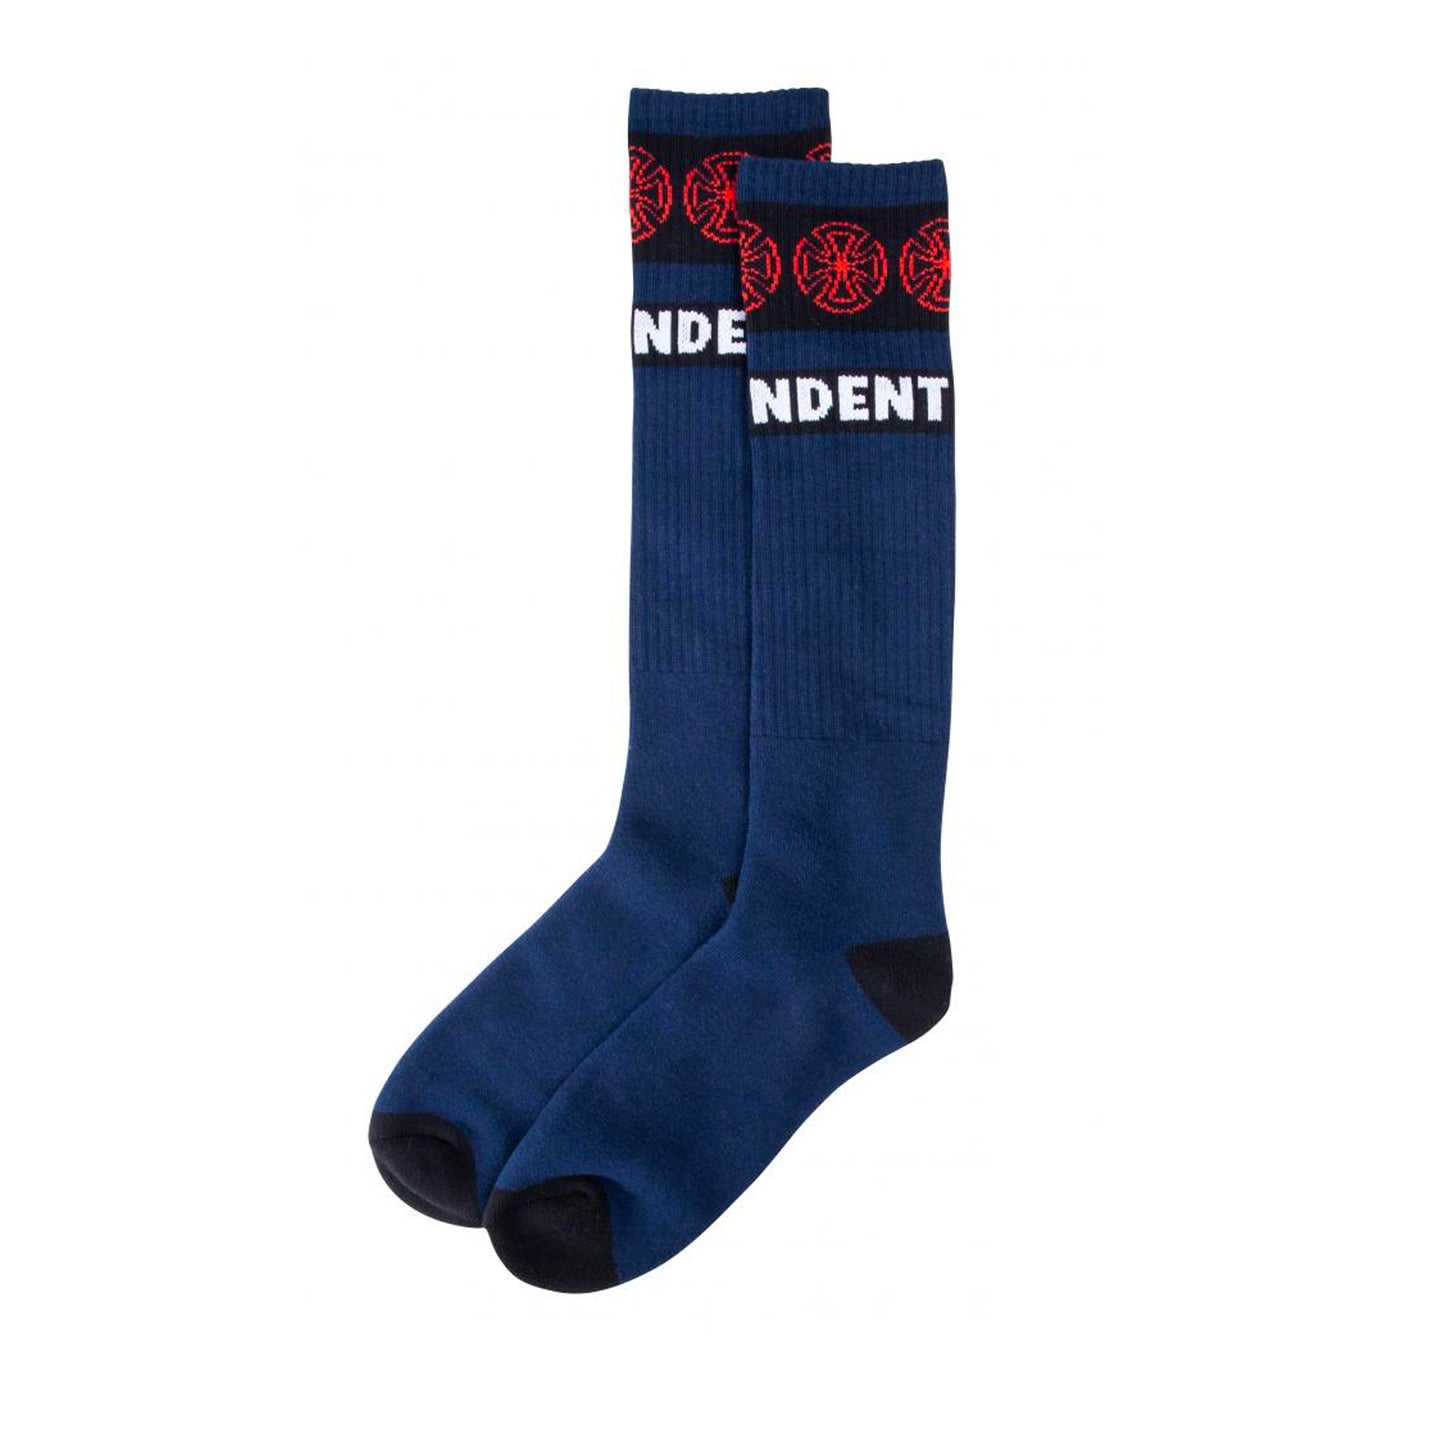 Independent Socks Woven Crosses Sock - Blue - Prime Delux Store